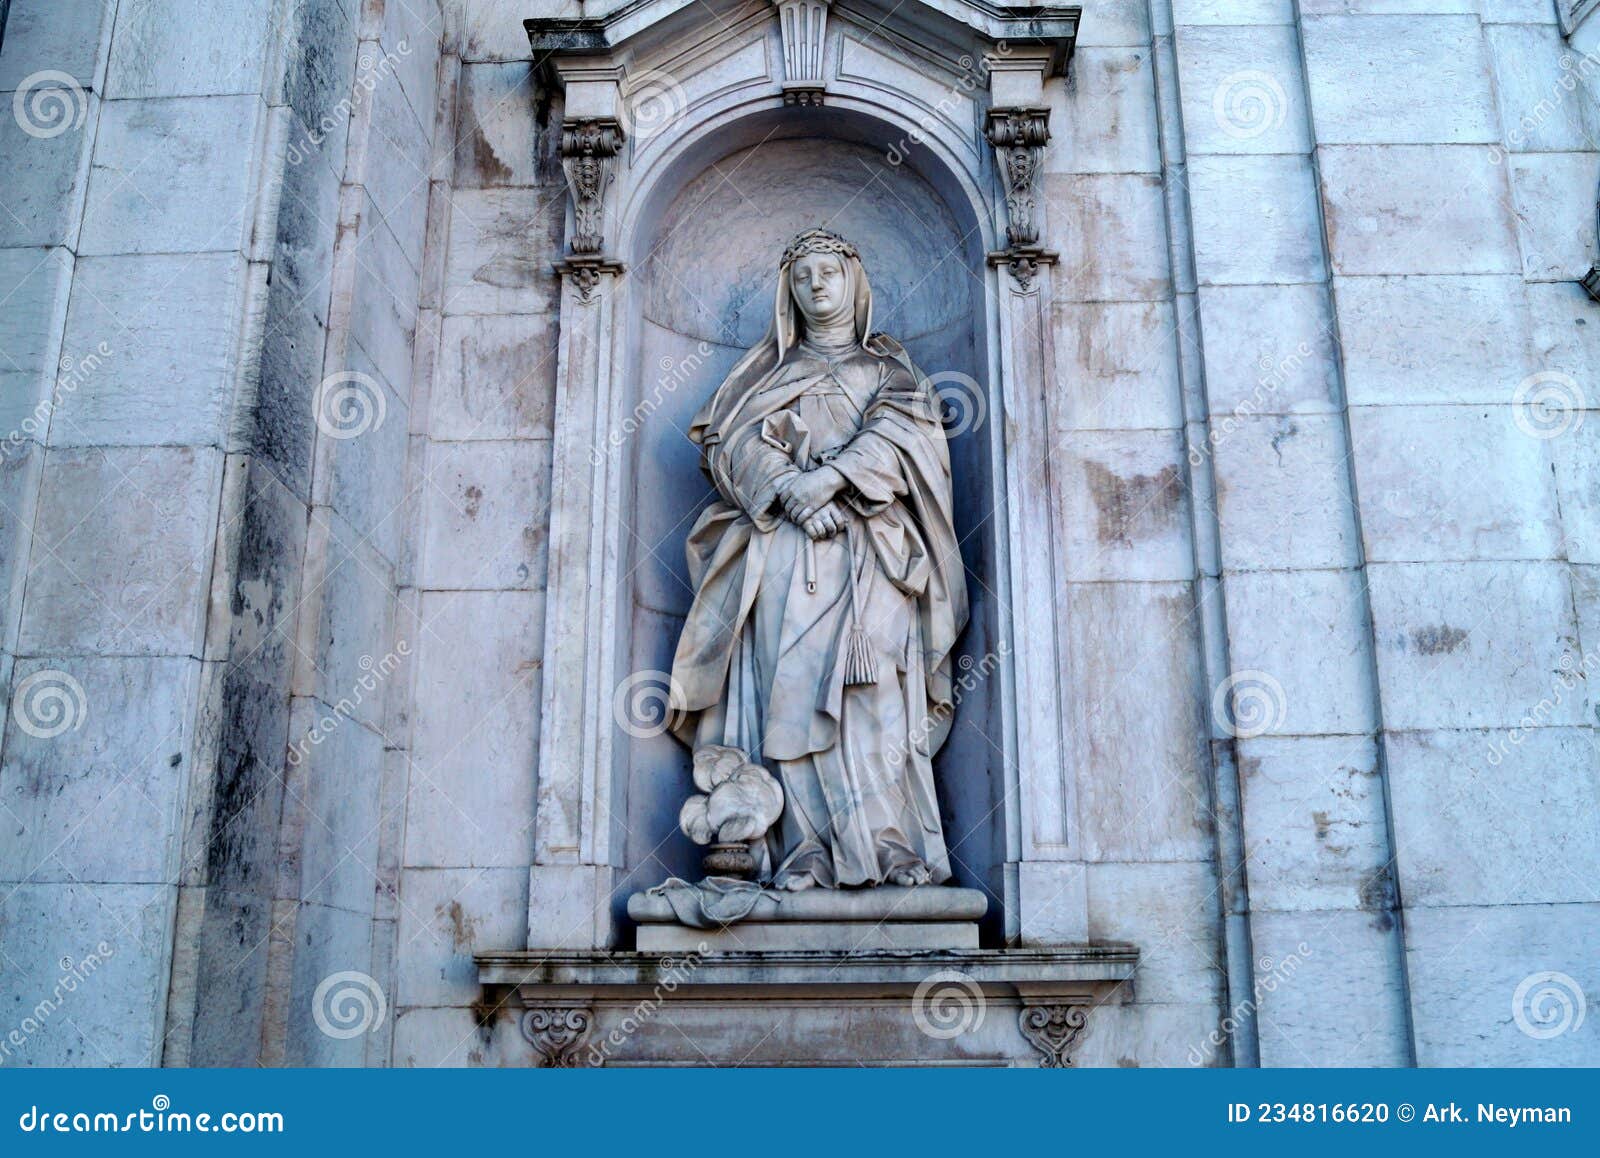 statue of st. mary magdalene de` pazzi, decoration of the facade of the estrela basilica, lisbon, portugal